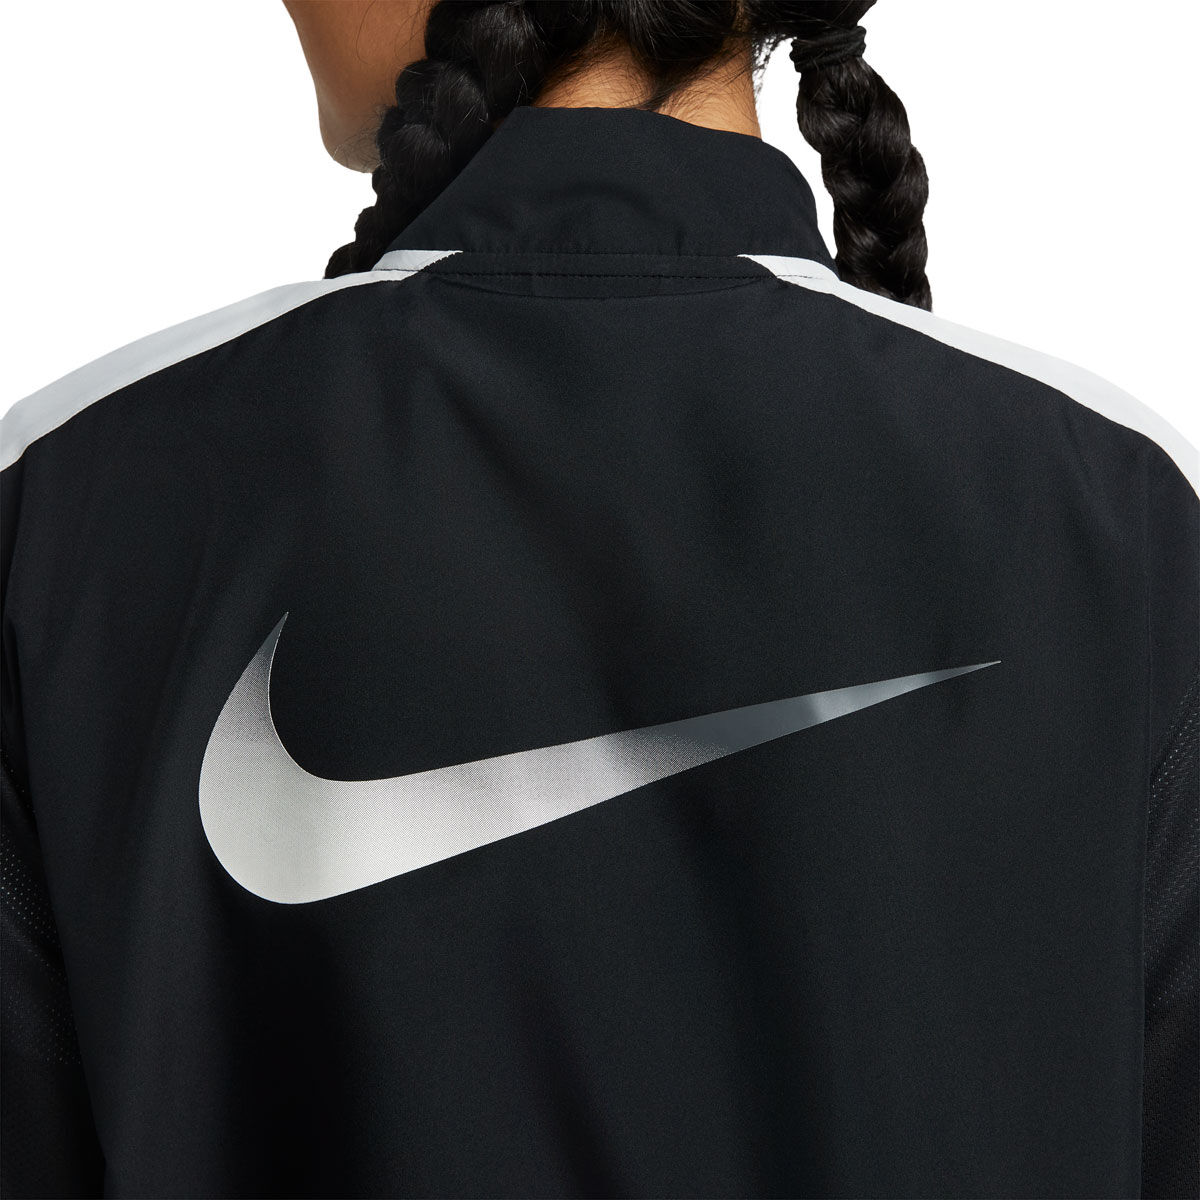 Nike Dri Fit Running Zip Up Jacket Black Small | Jackets, Running jacket,  Nike jacket